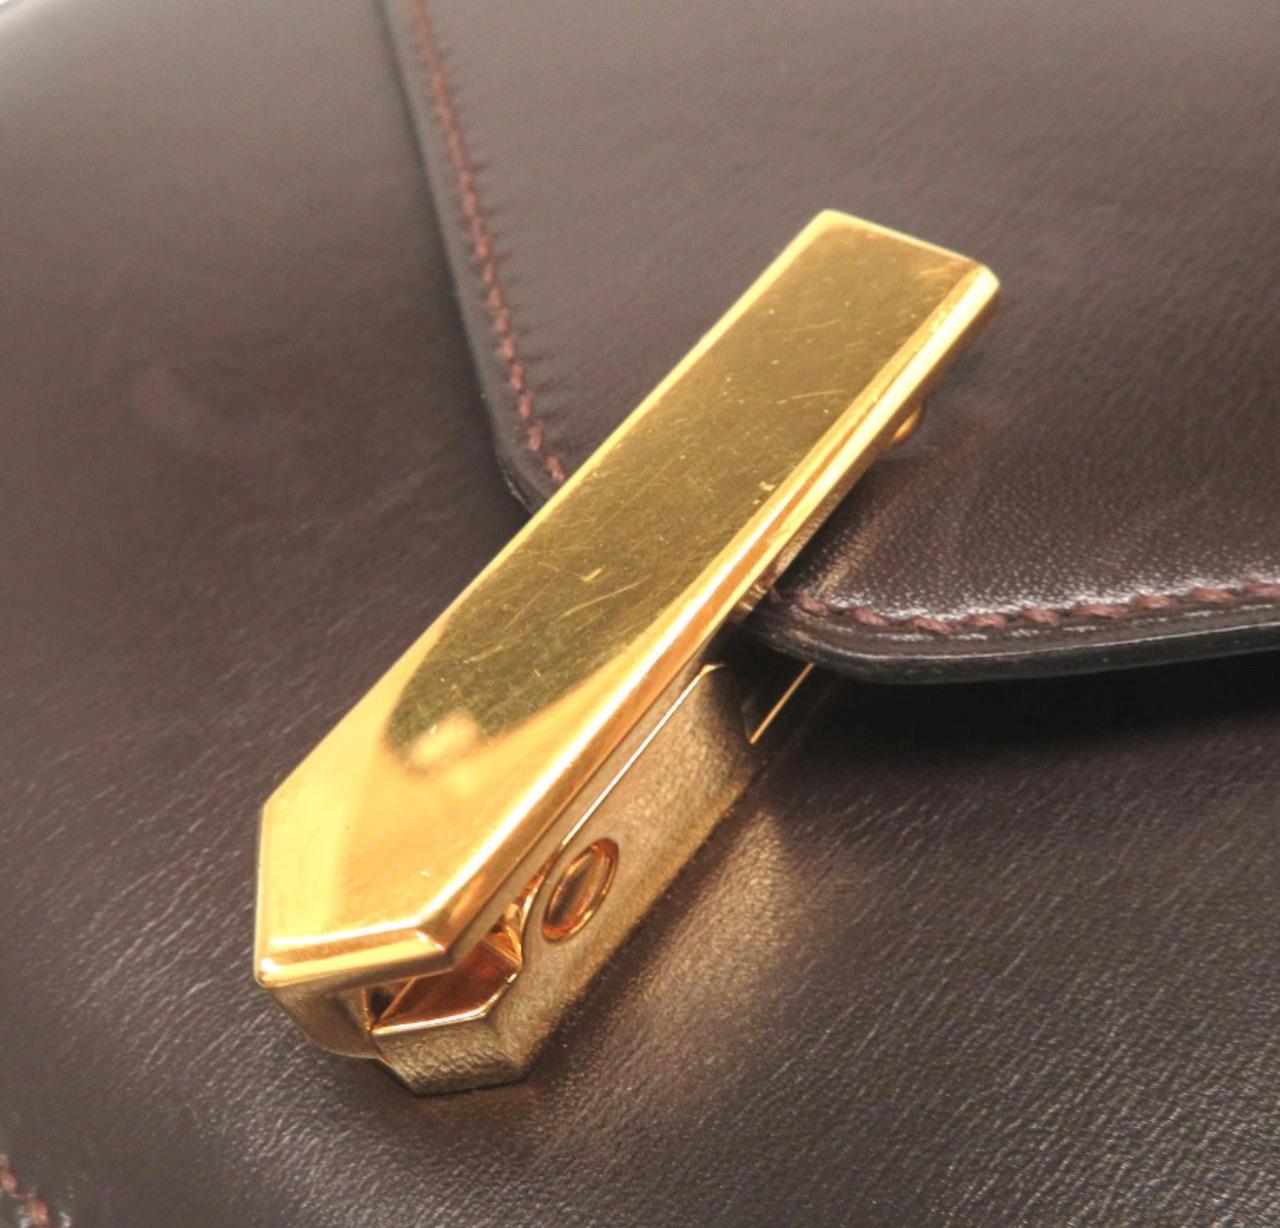 
Leather
Gold tone hardware
Leather lining
Hinge closure 
Made in France
Adjustable shoulder strap drop 18-32